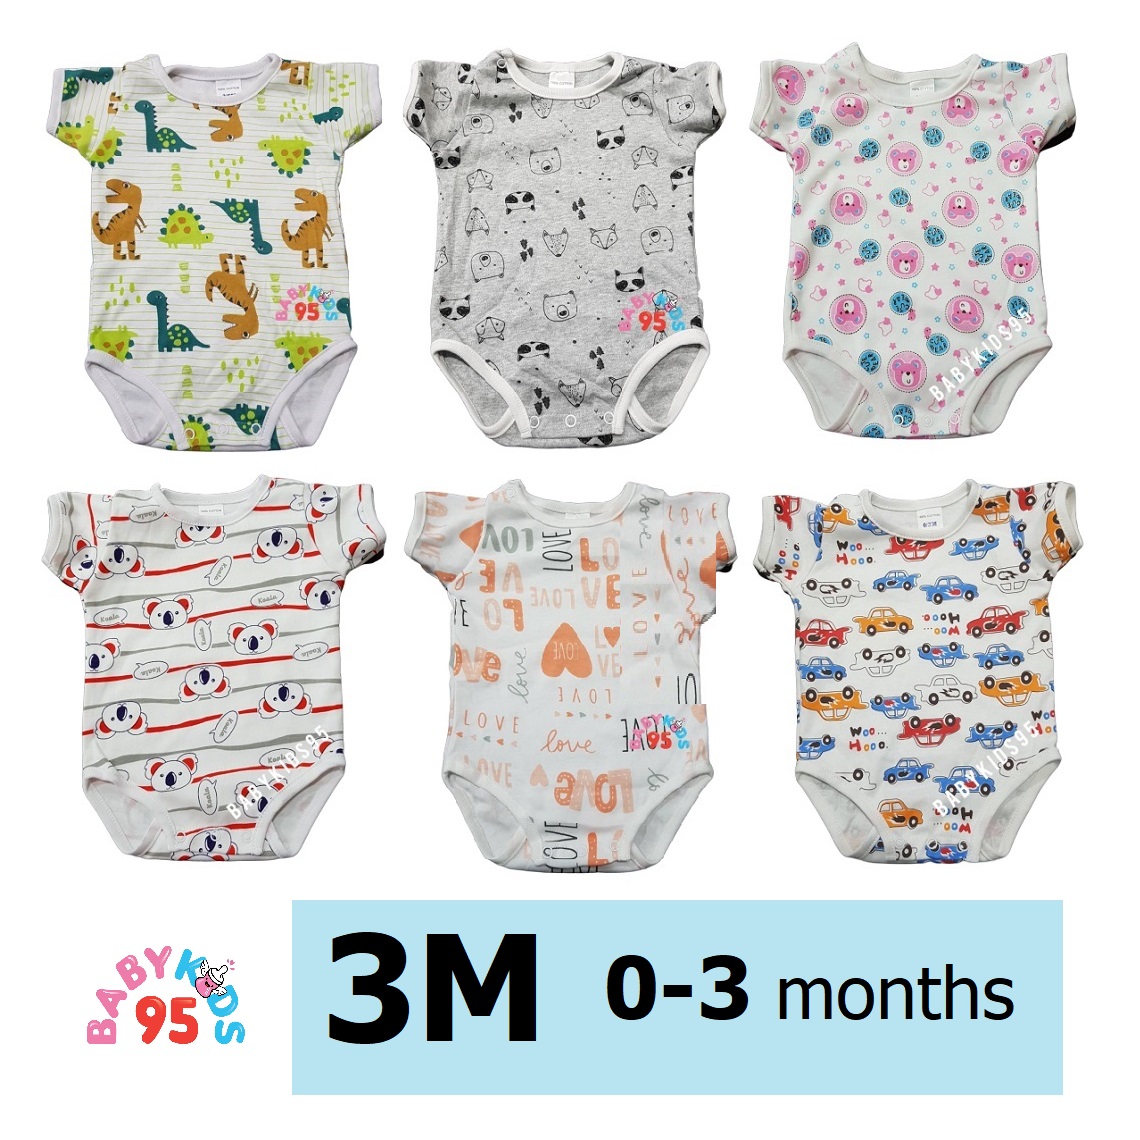 BABYKIDS95 บอดี้สูท เด็ก 0-3 เดือน ชุดเด็ก เสื้อผ้าเด็ก Body suite Romper for Baby or Infant 0-3 months old ( 3M THR )